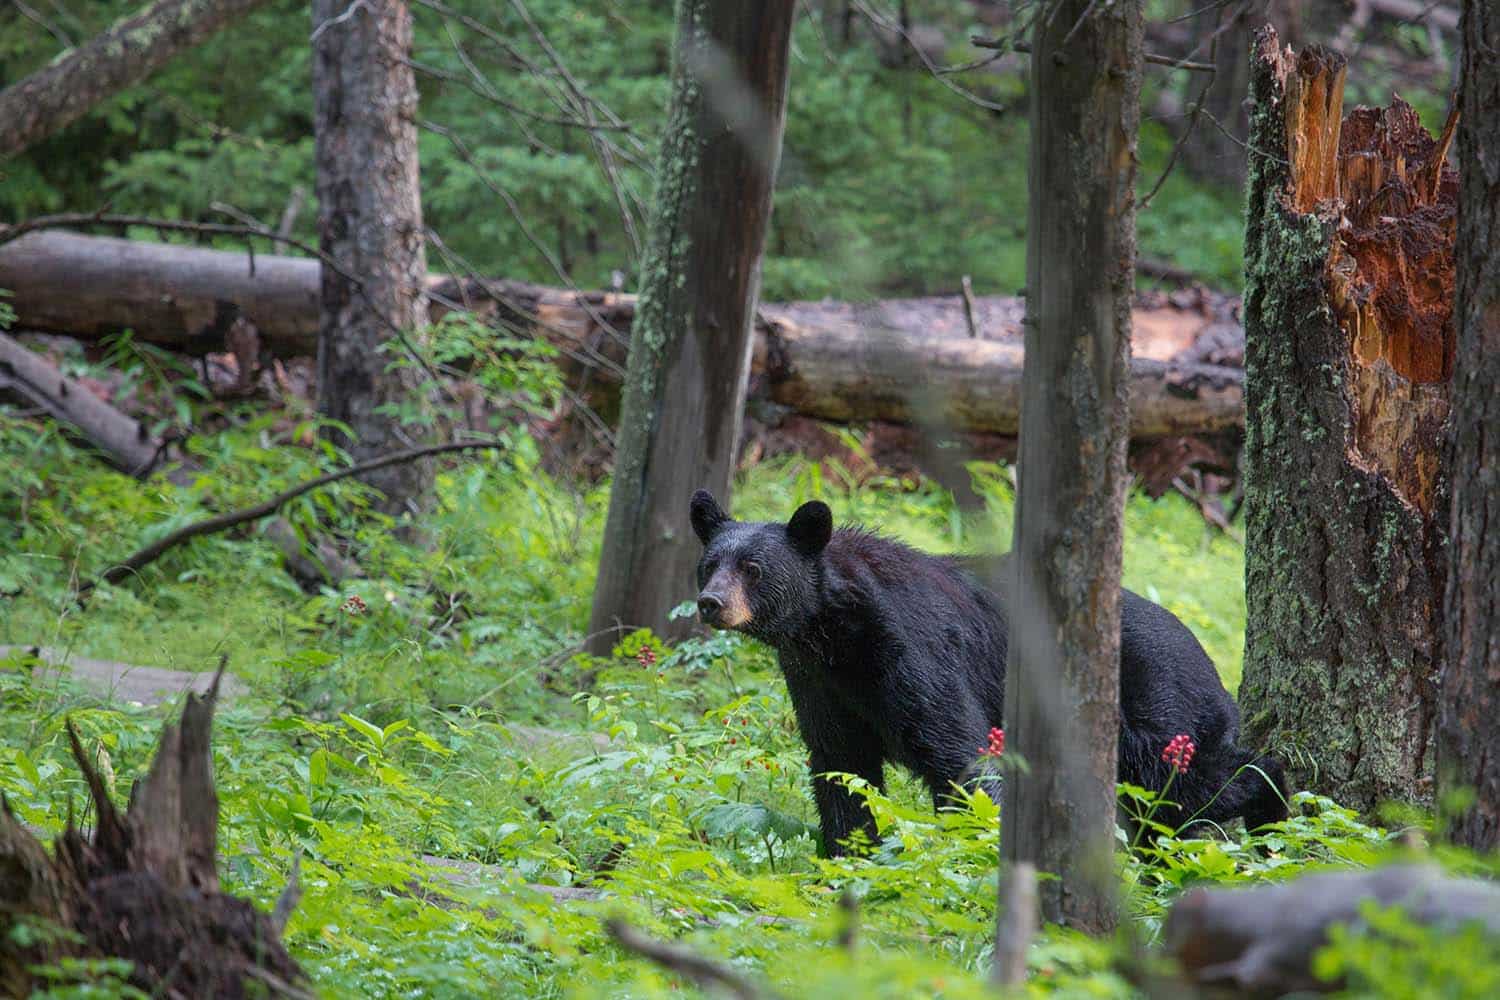 A black bear walks through dense berry bushes